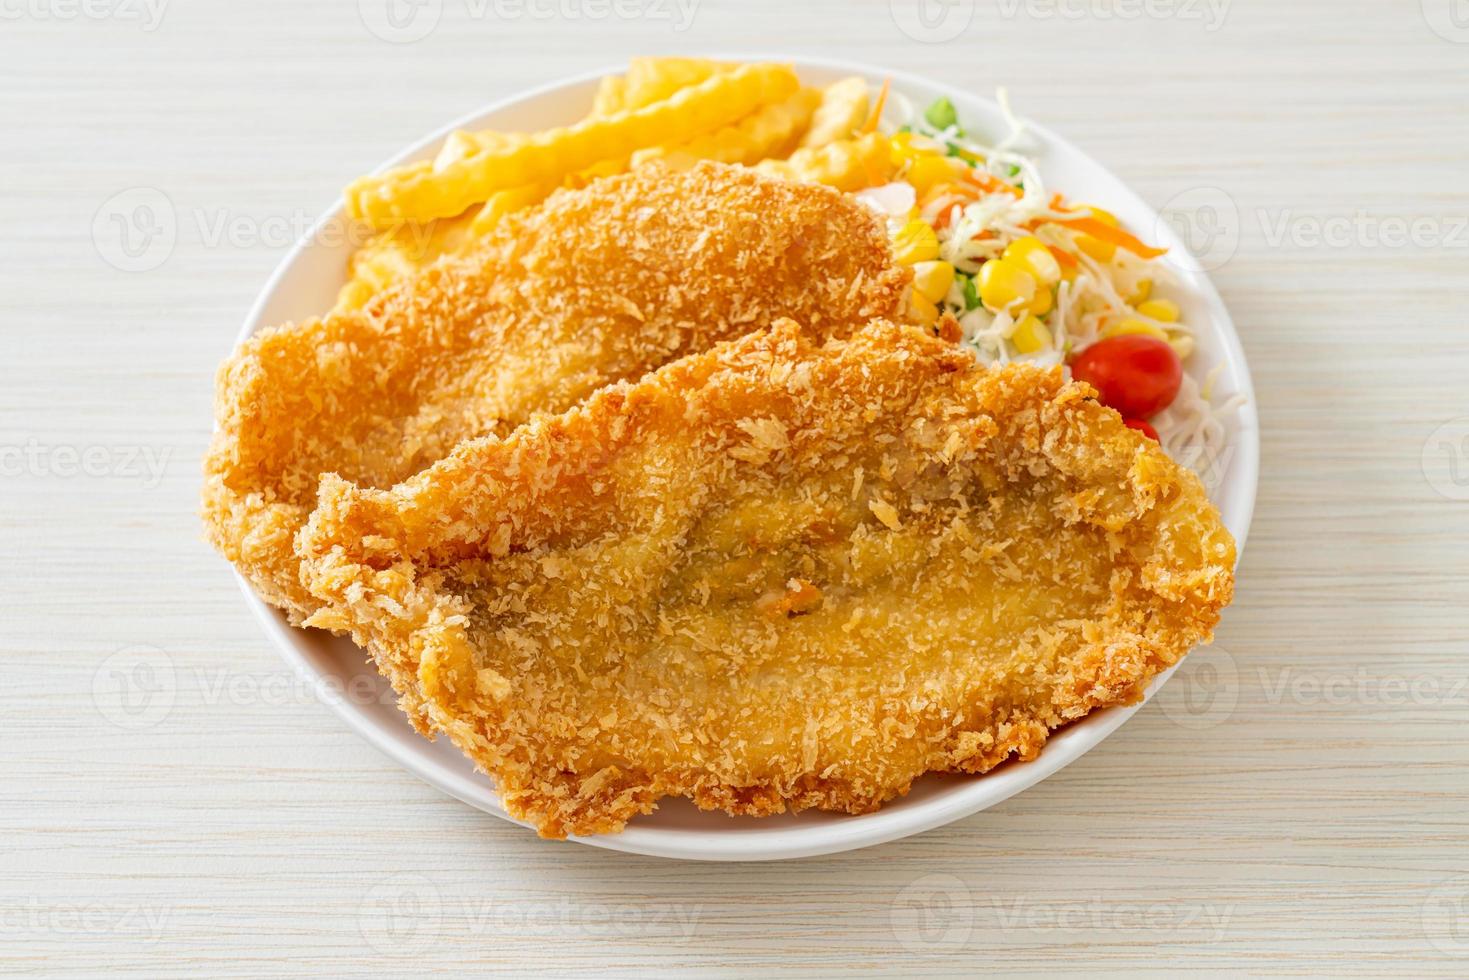 peixe e batatas fritas com mini salada foto